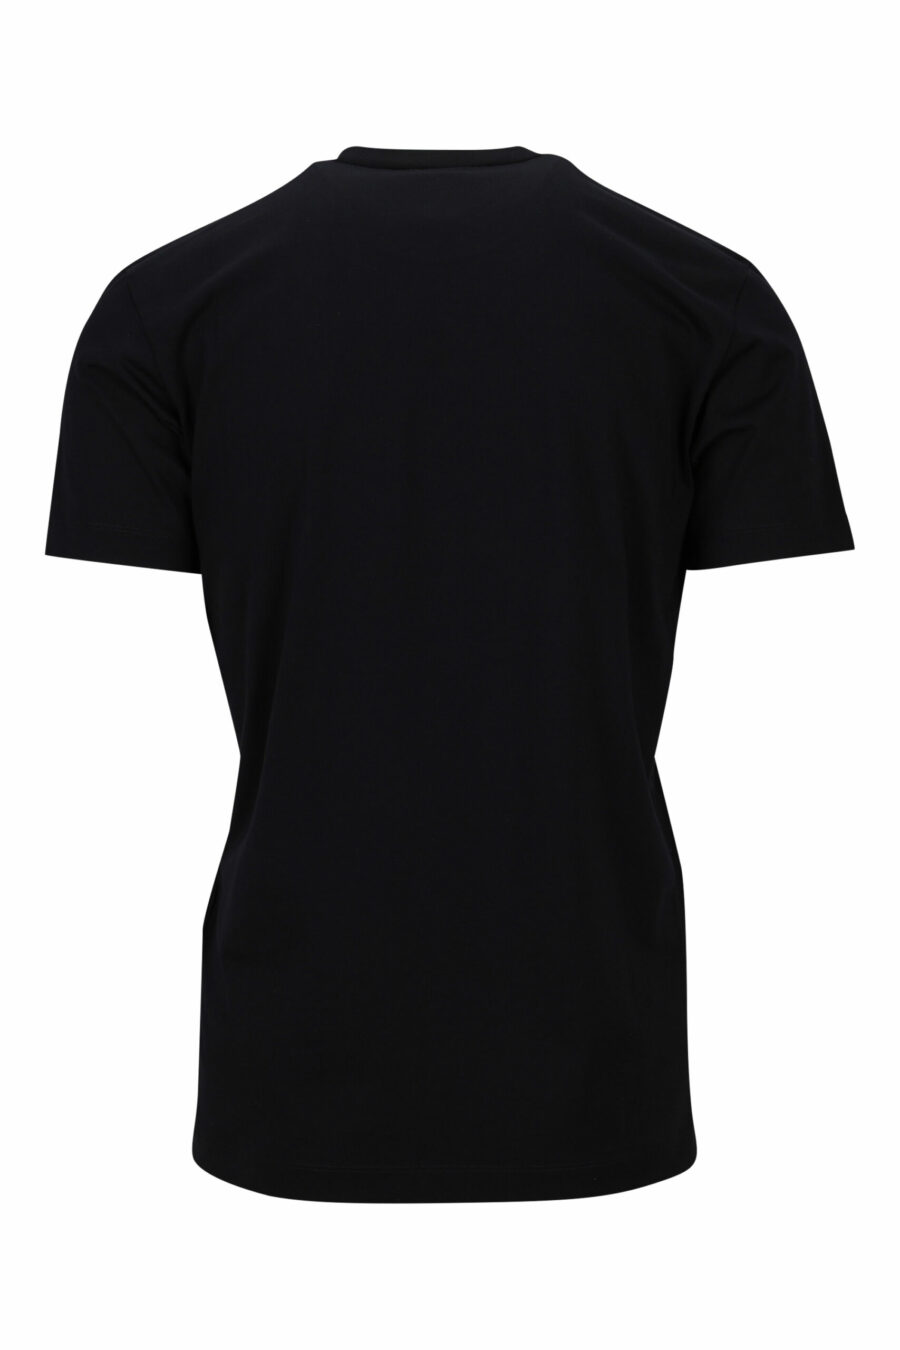 Black T-shirt with minilogo "ceresio 9, milano" - 8054148505264 1 scaled